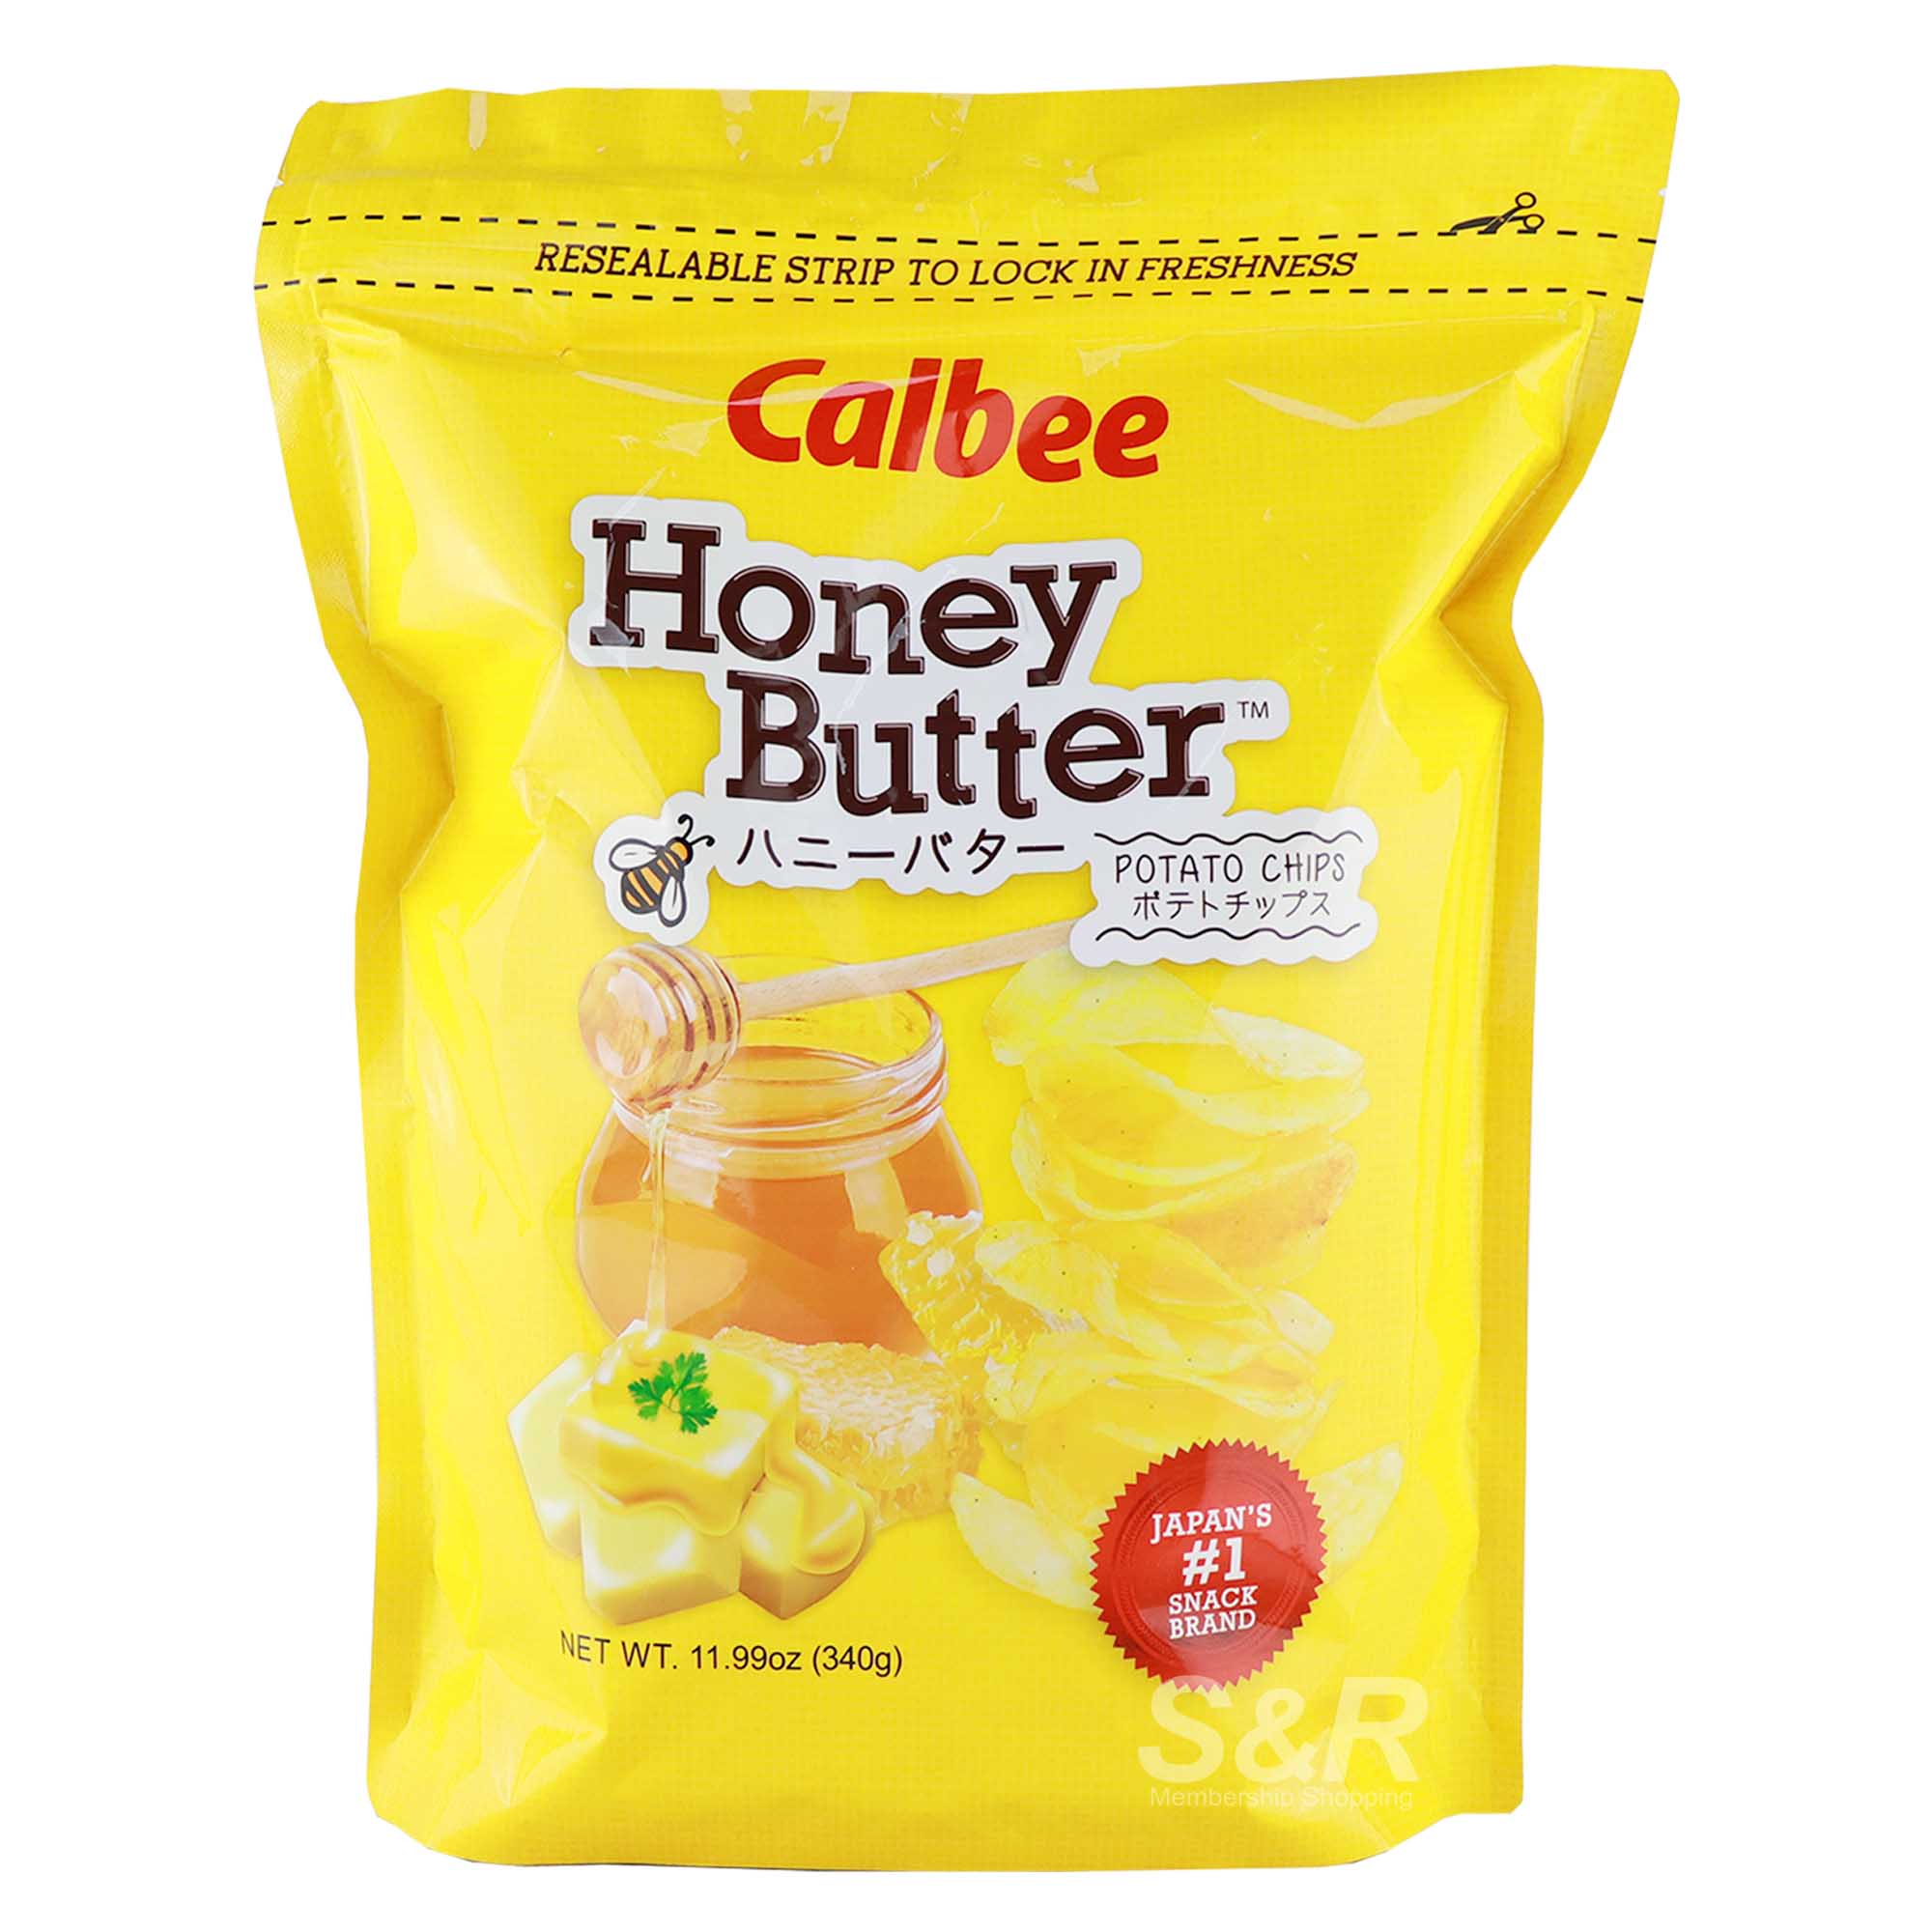 Calbee Honey Butter Potato Chips 340g